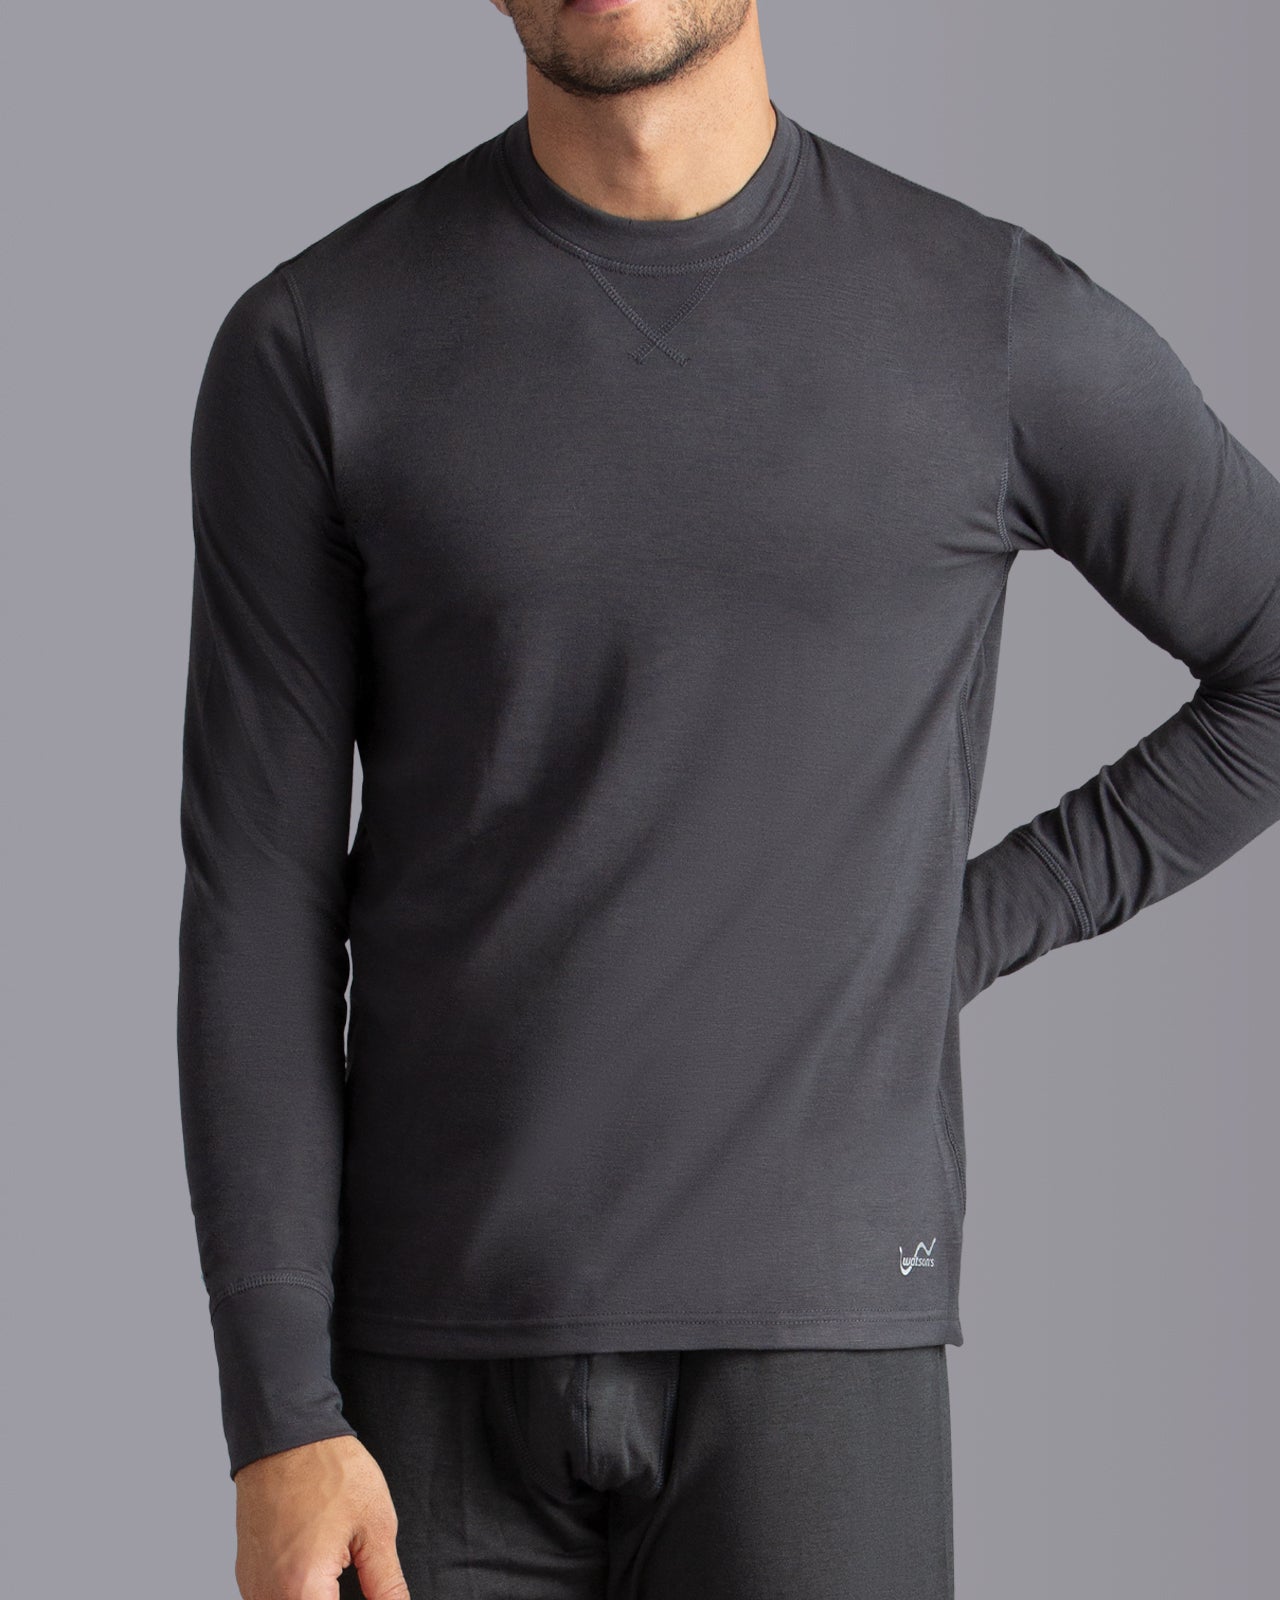 Watson's Men's Performance Base Layer Thermal Long Sleeve Top